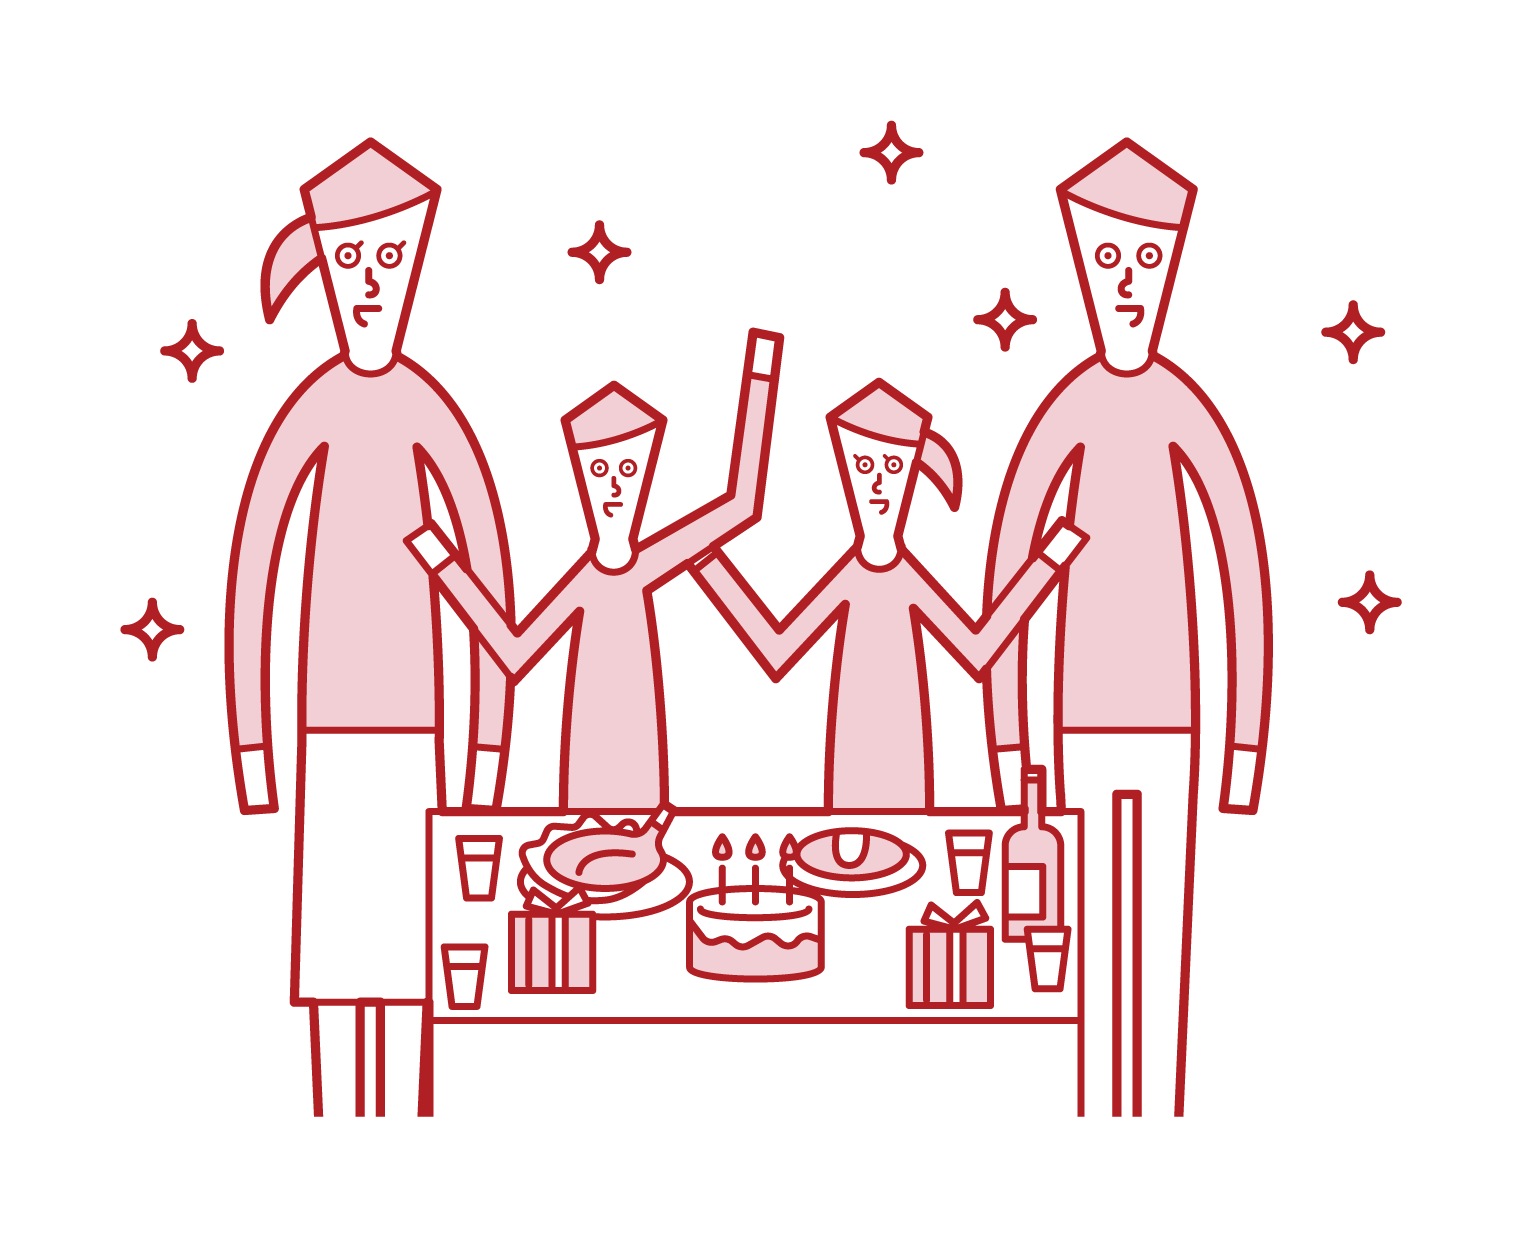 Illustration of a family enjoying a pertay